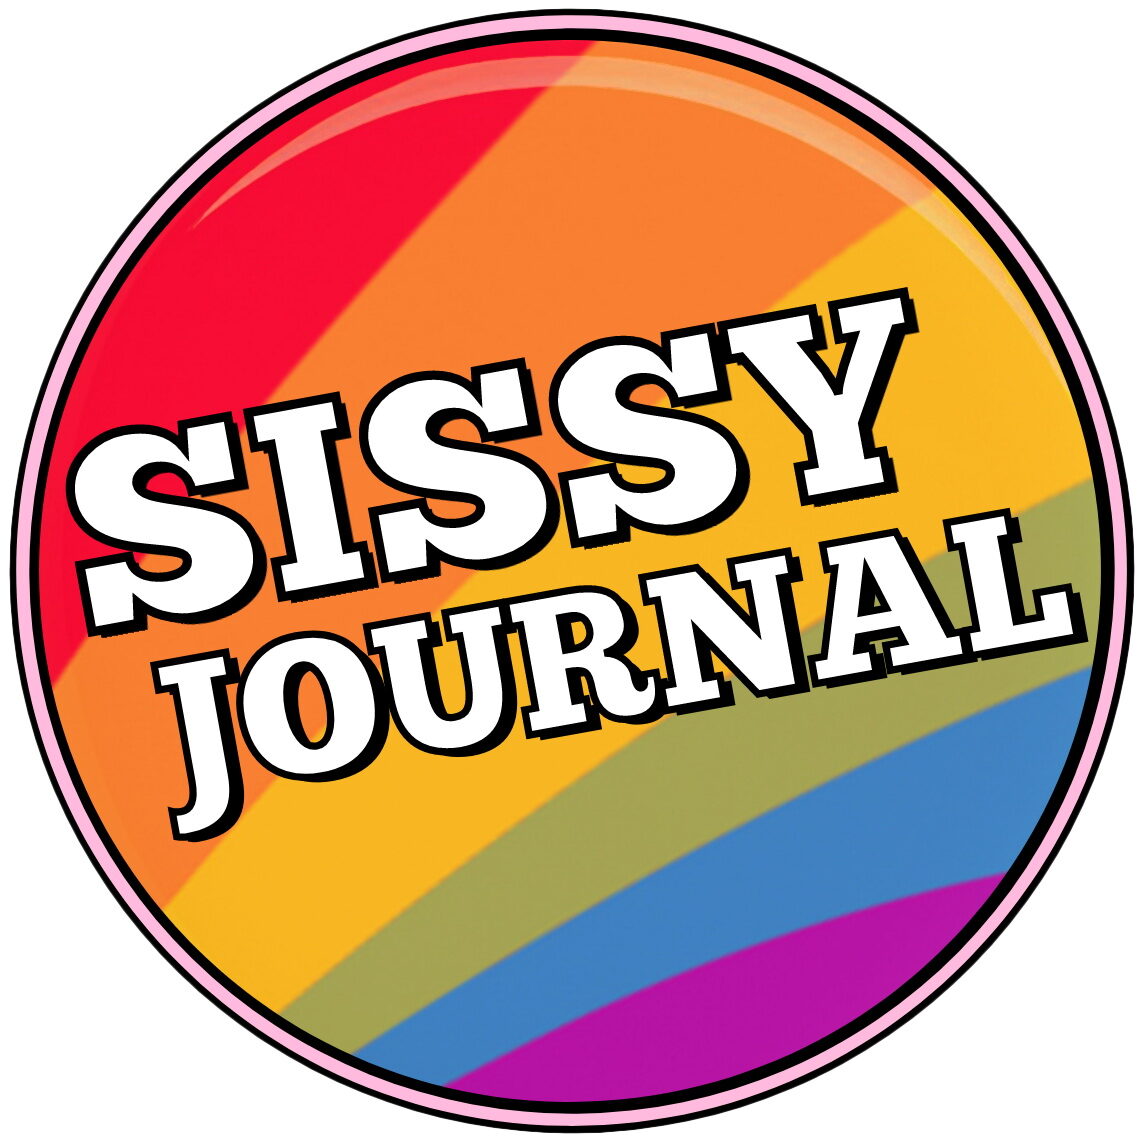 Sissy Journal